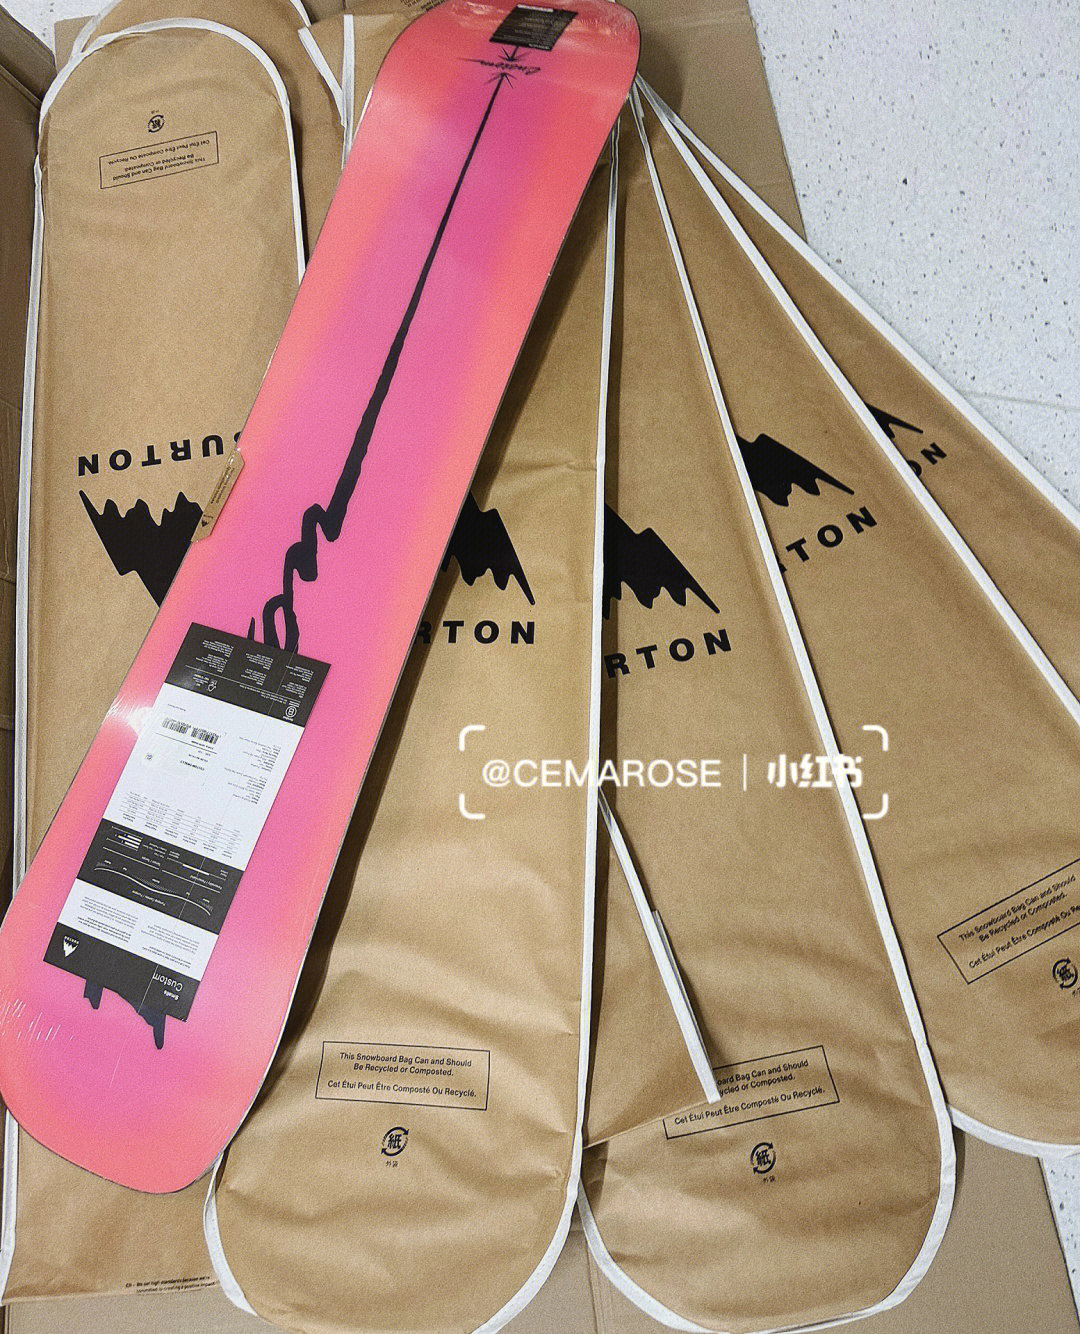 burton滑雪板价位图片